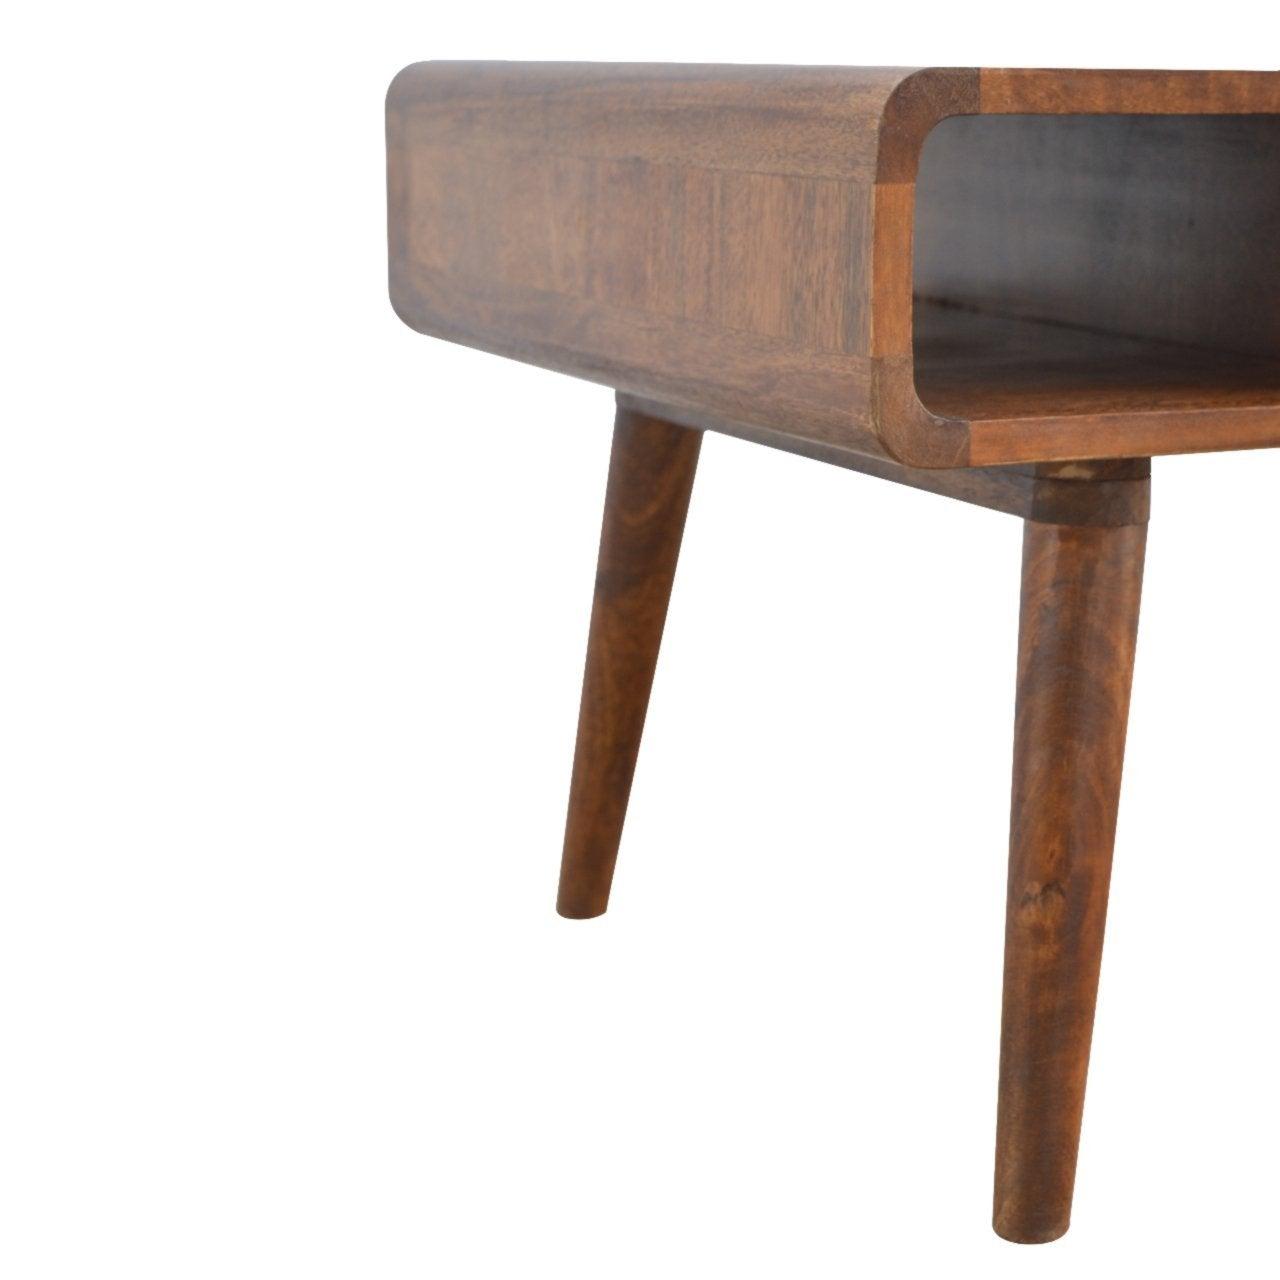 Curved chestnut coffee table - crimblefest furniture - image 7